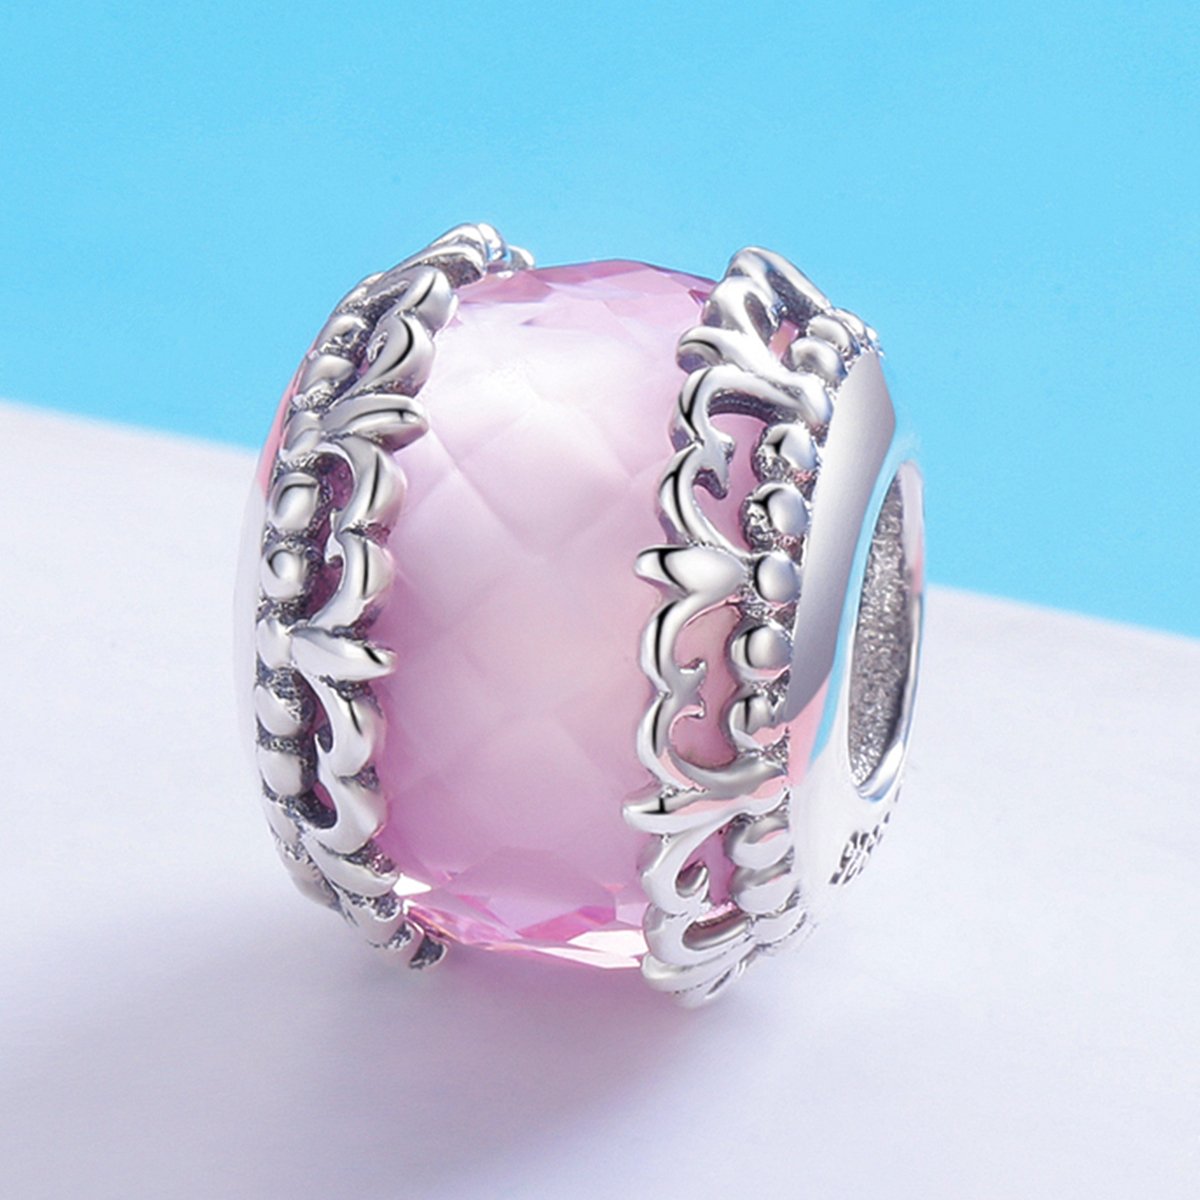 Sterling 925 silver charm the pink origin fits Pandora charm and European charm bracelet Xaxe.com